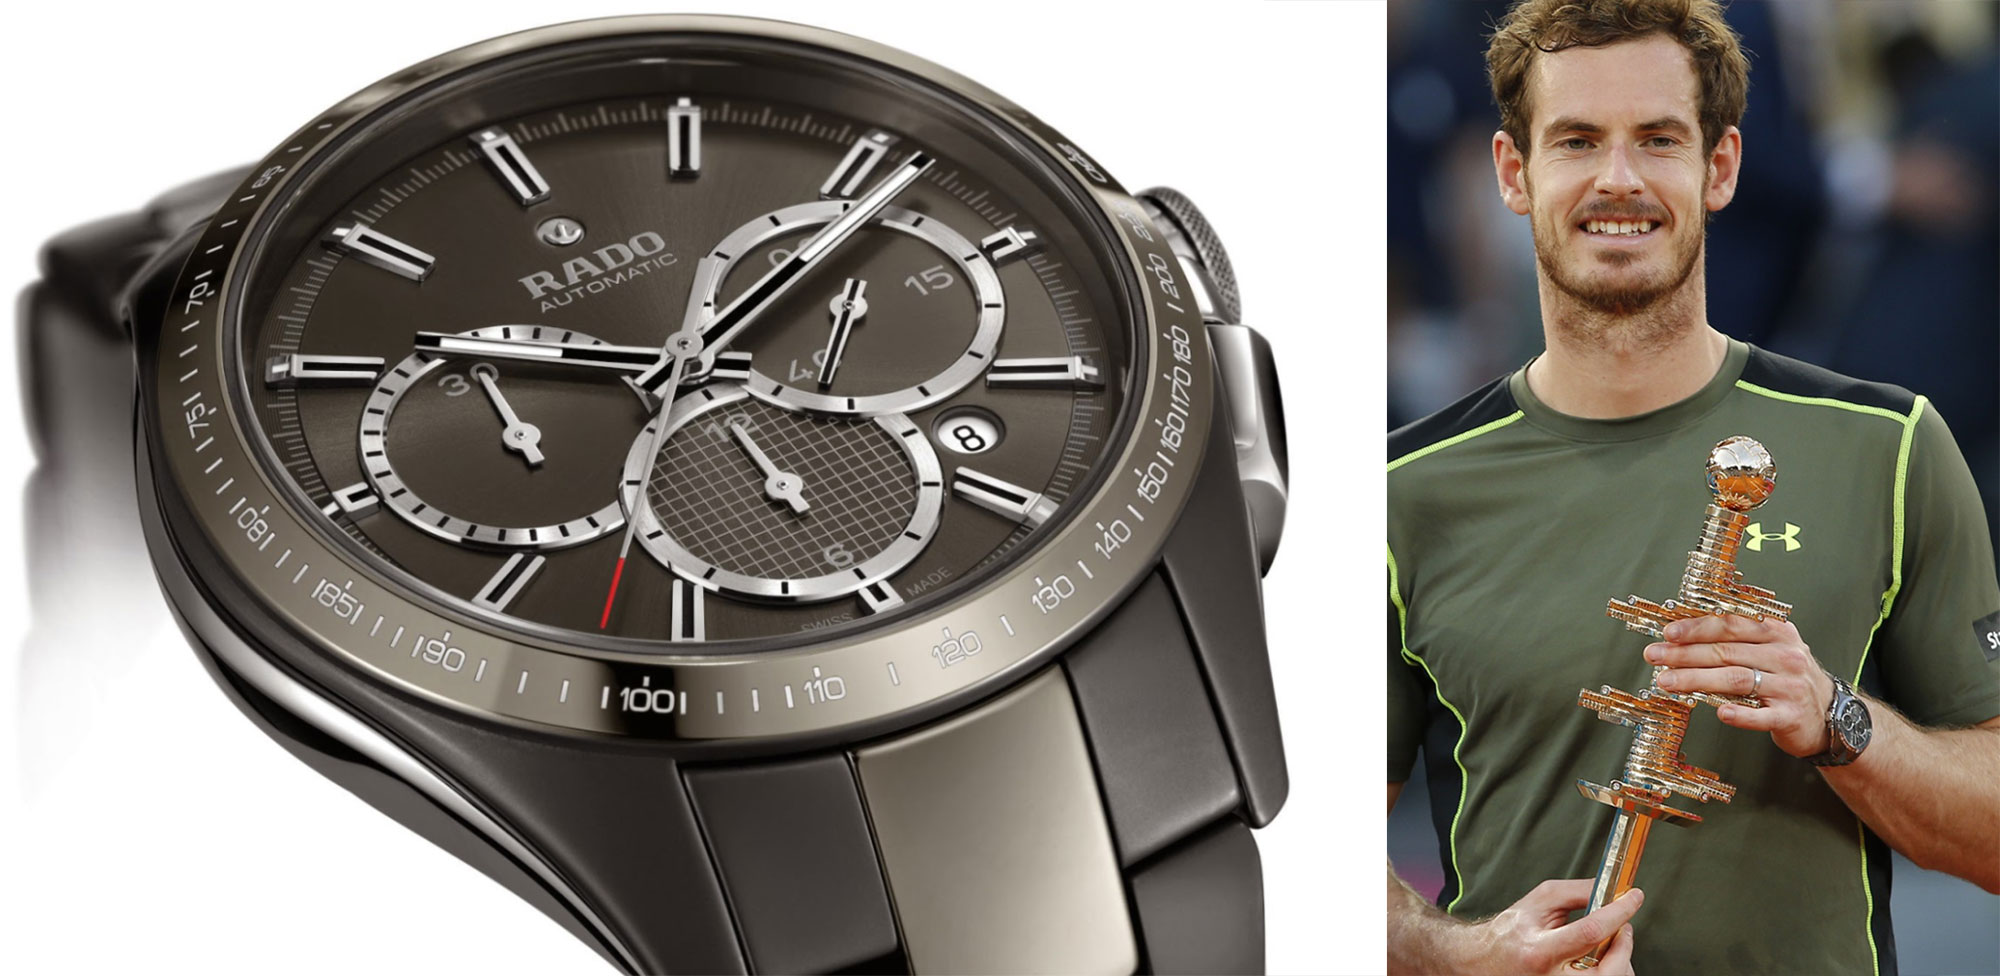 Rado Automatic Chronograph watch worn by Andy Murray